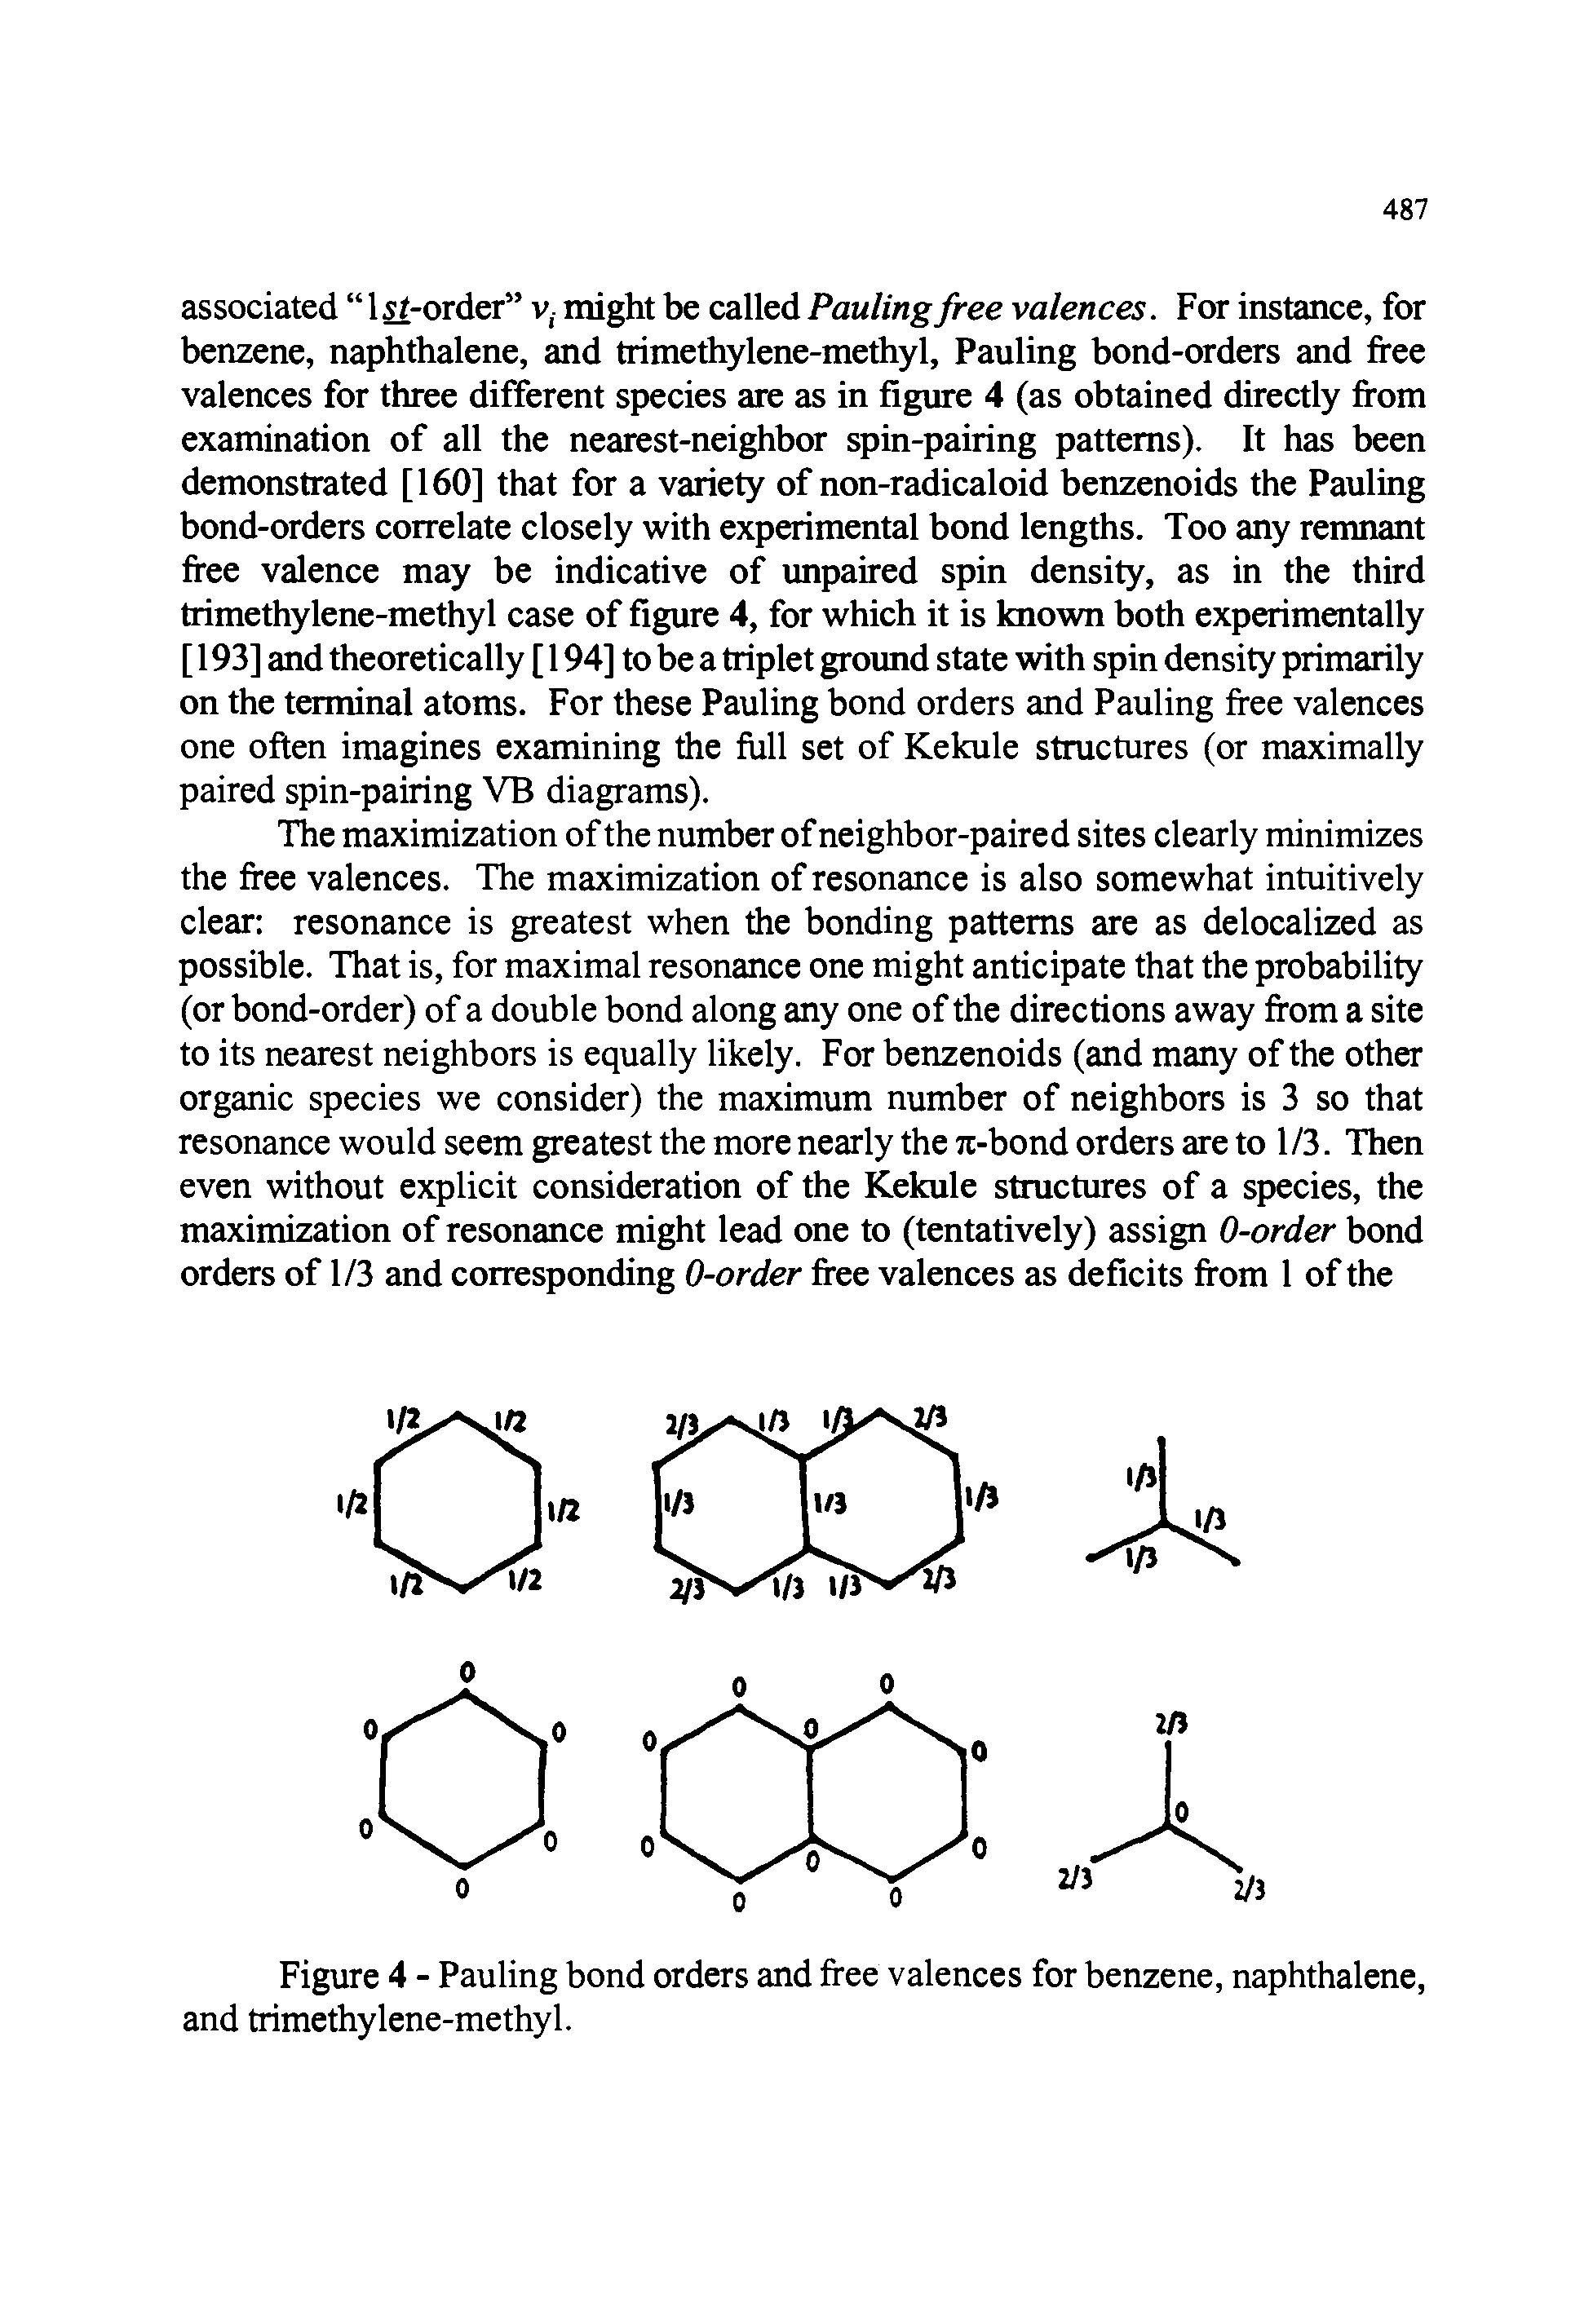 Figure 4 - Pauling bond orders and free valences for benzene, naphthalene, and trimethylene-methyl.